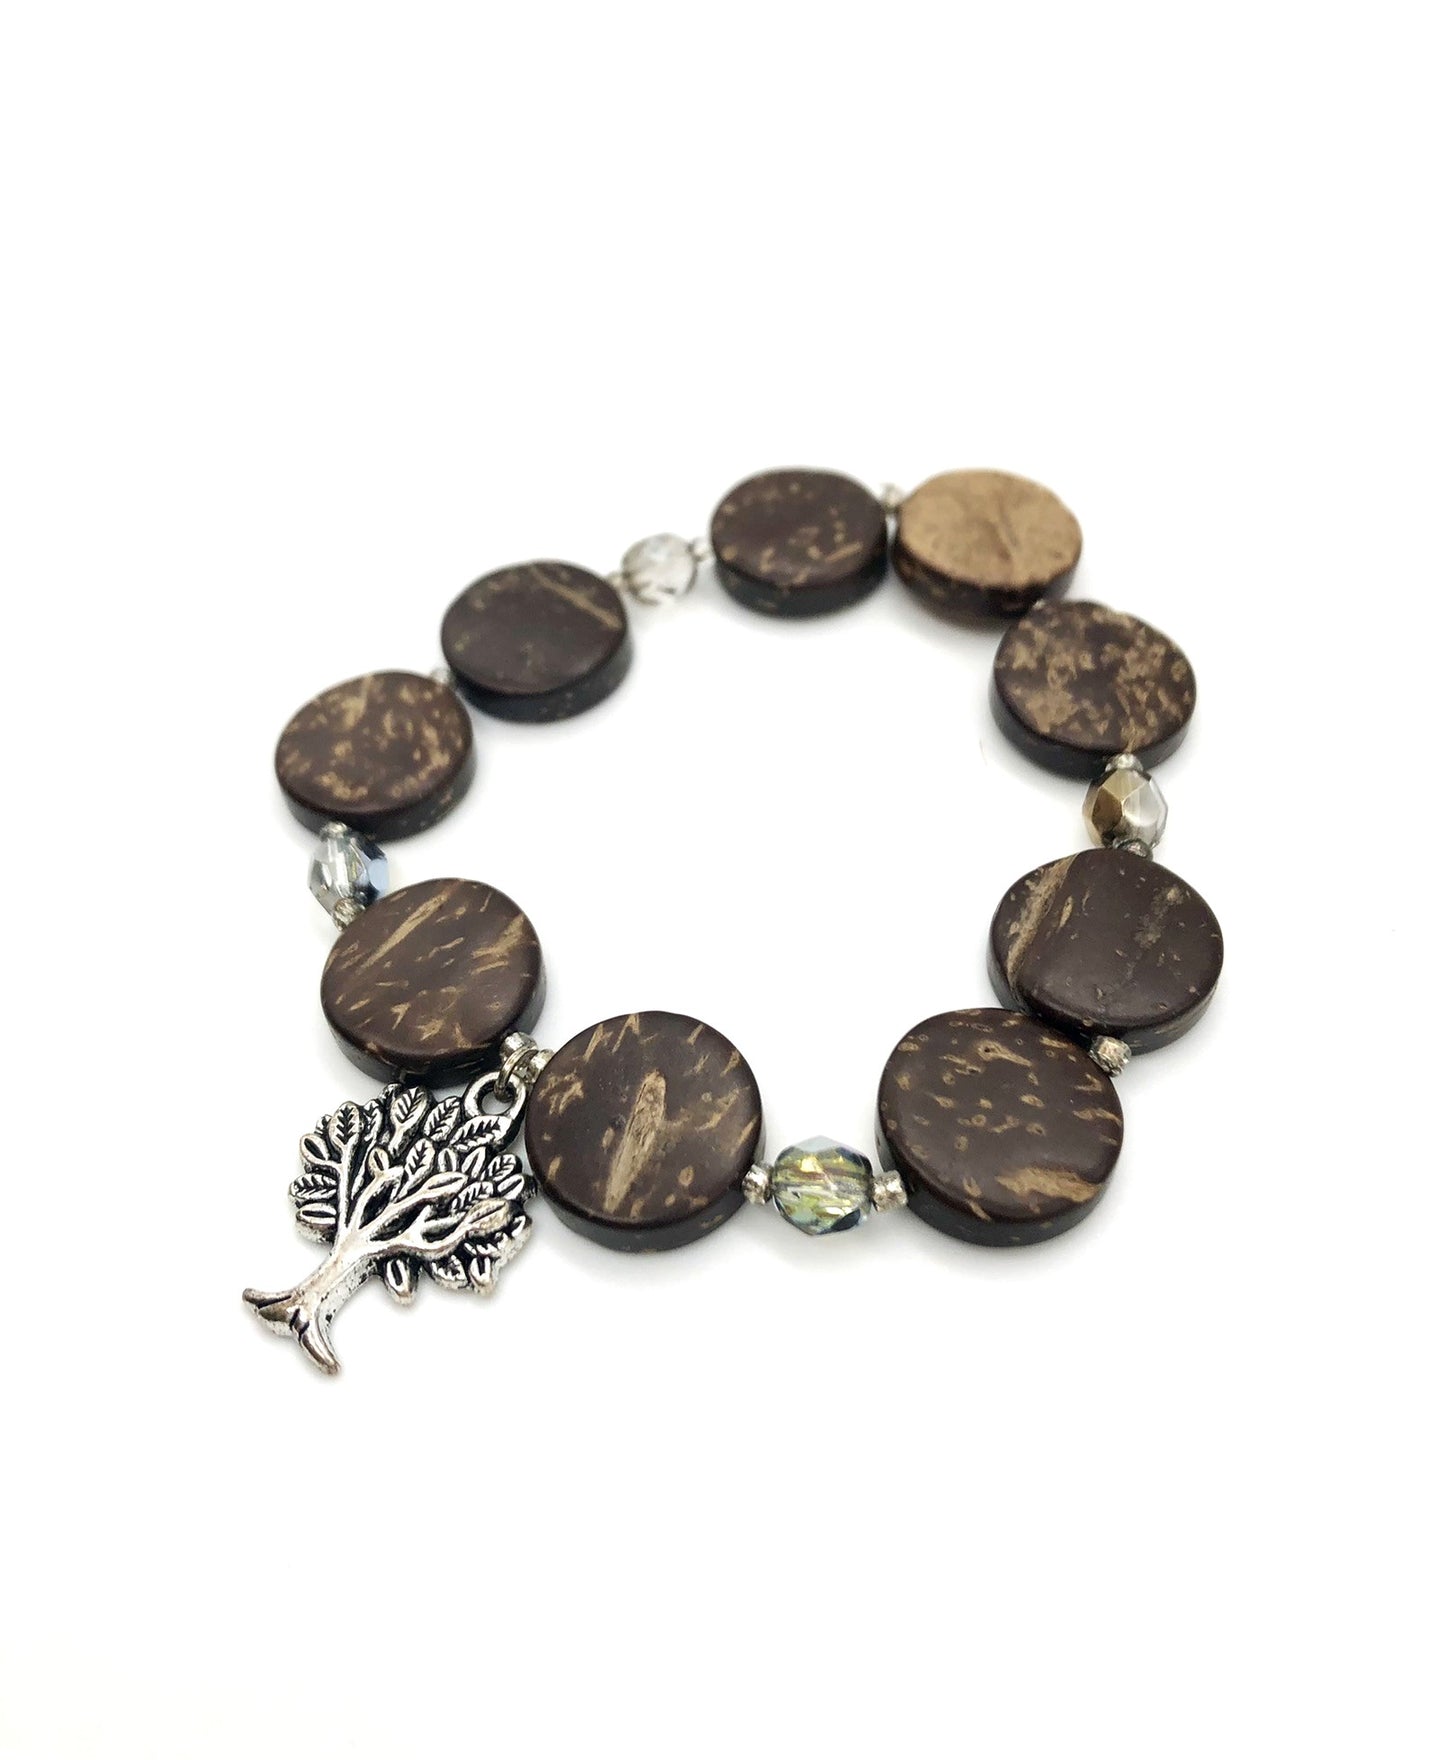 Antique silver round tree charm, round wood bead, amber glass bead stretch bracelet